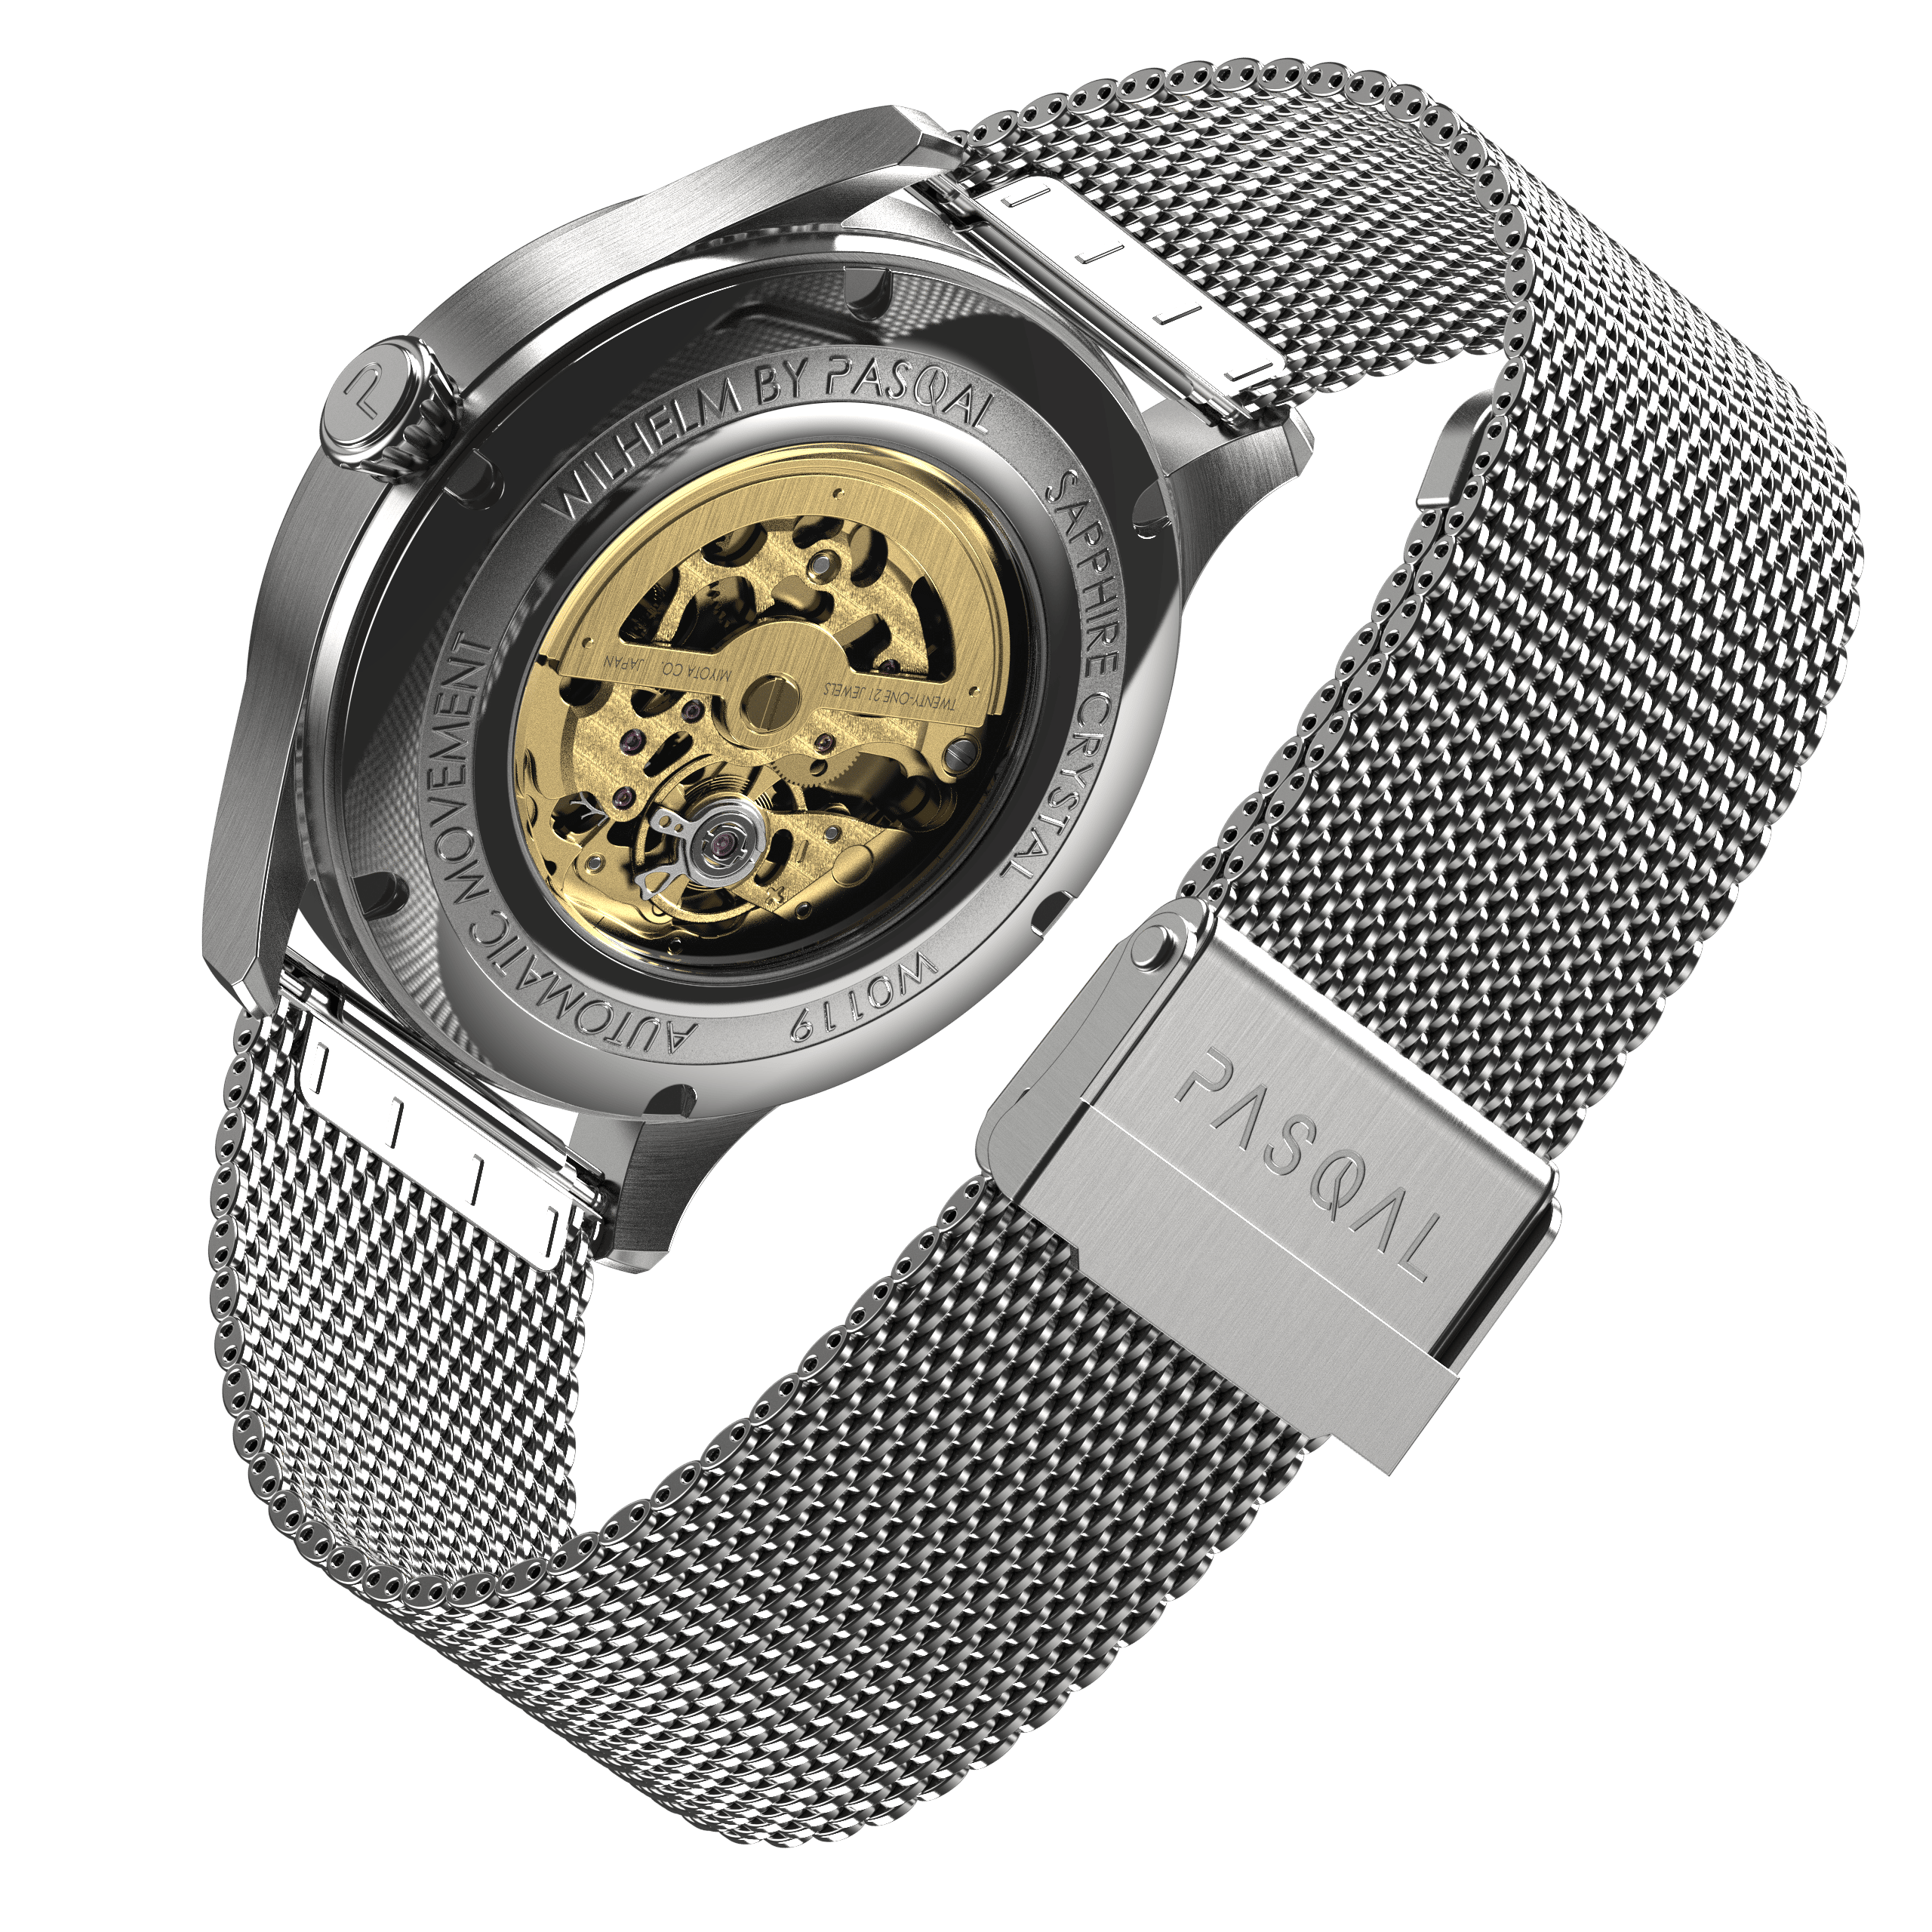 Wilhelm 42 Grey/Blue - Pasqal Watches